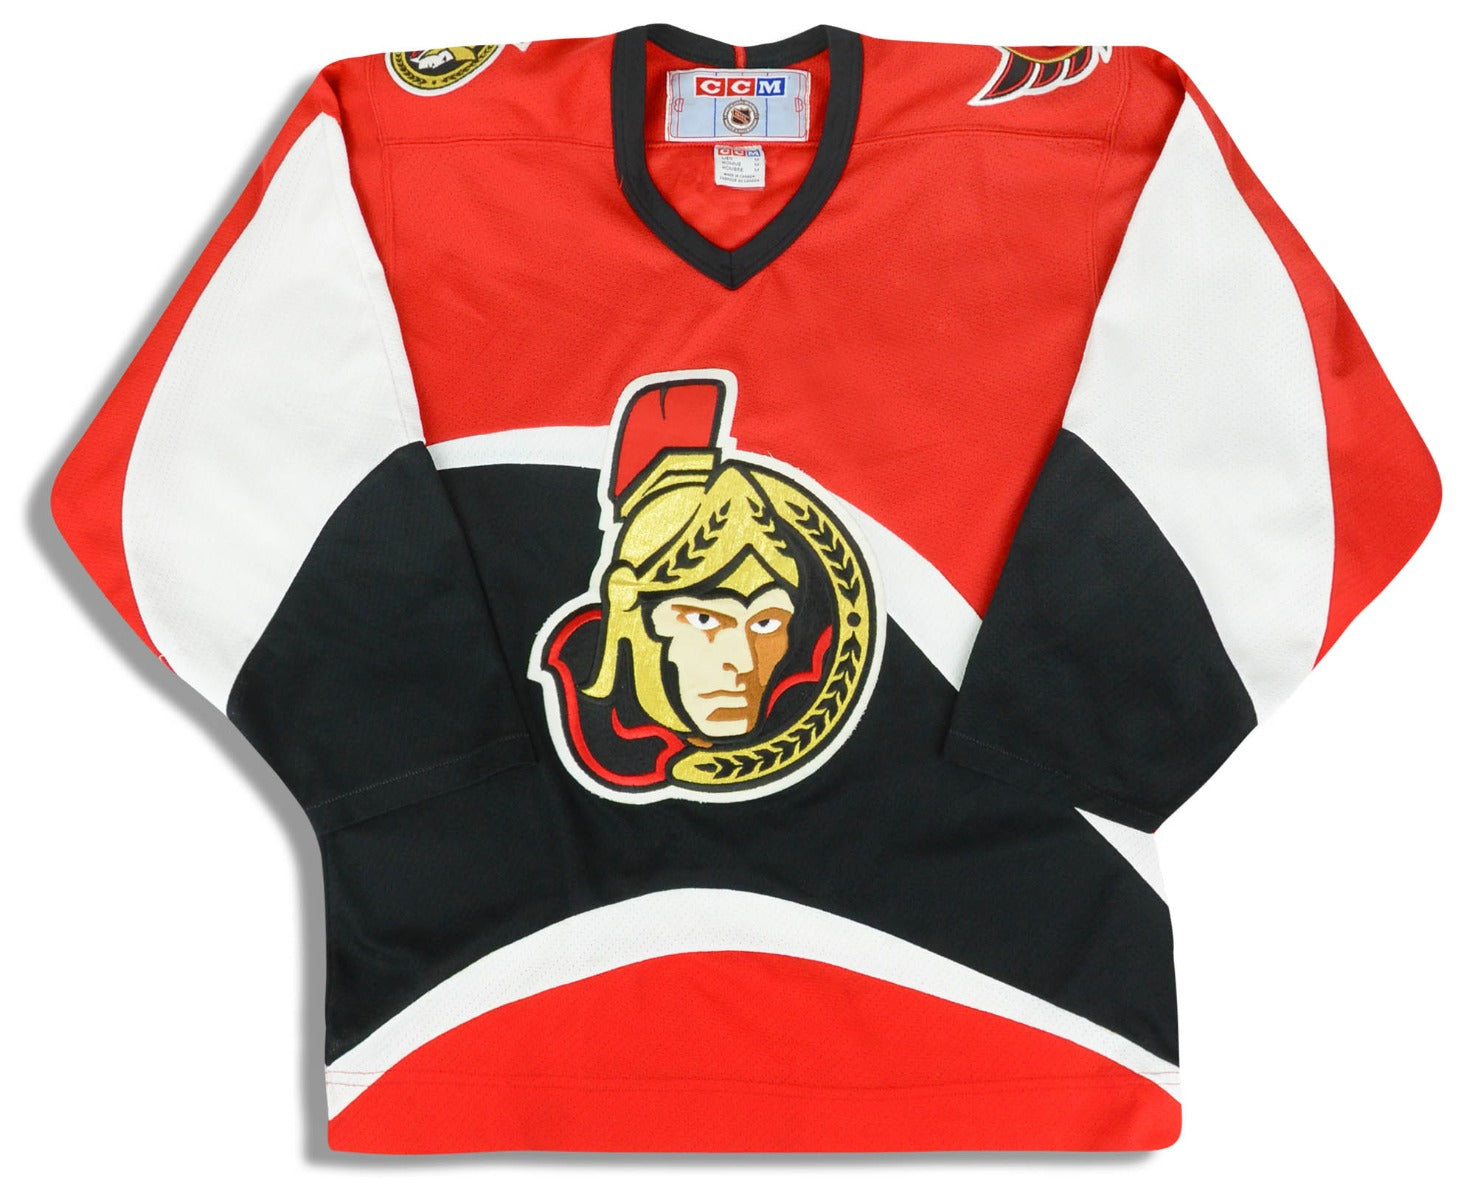 Ottawa Senators Gear, Senators Jerseys, Ottawa Senators Clothing